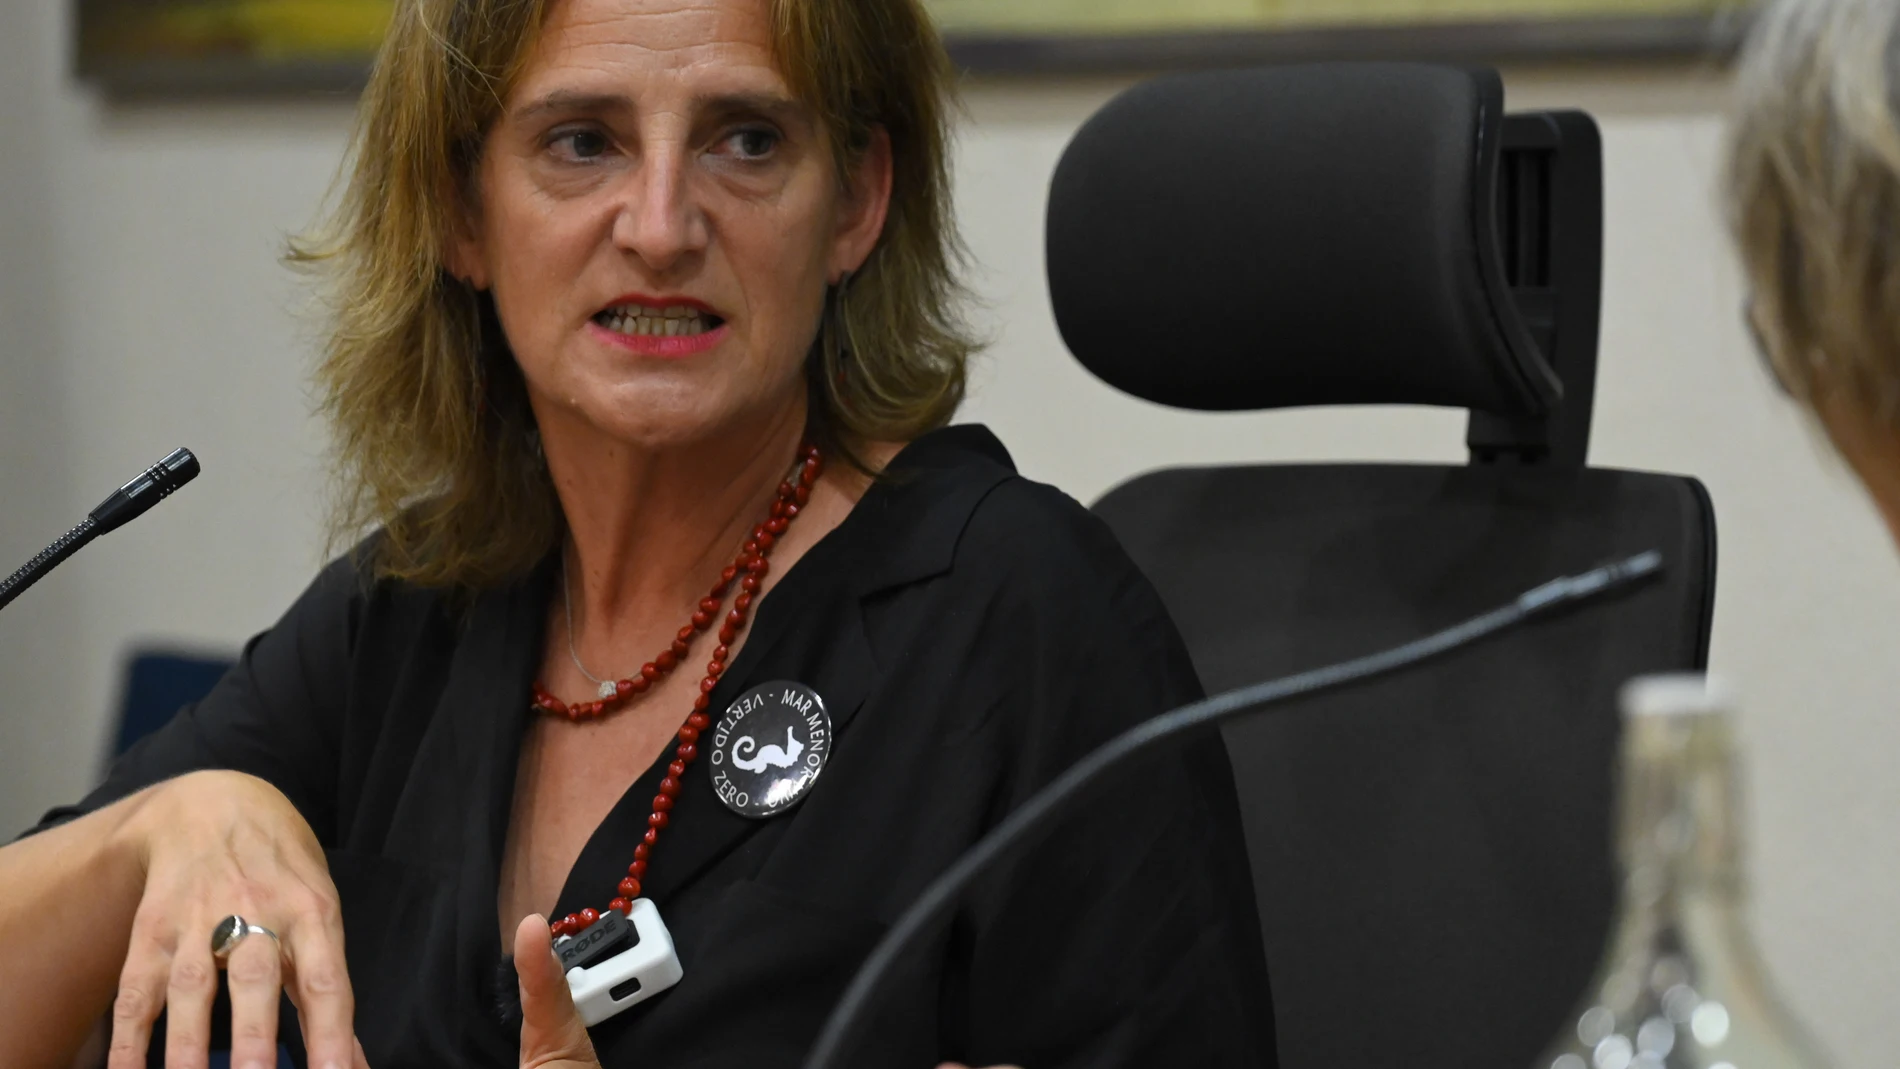 La vicepresidenta Teresa Ribera entra en la Ejecutiva Federal del PSOE